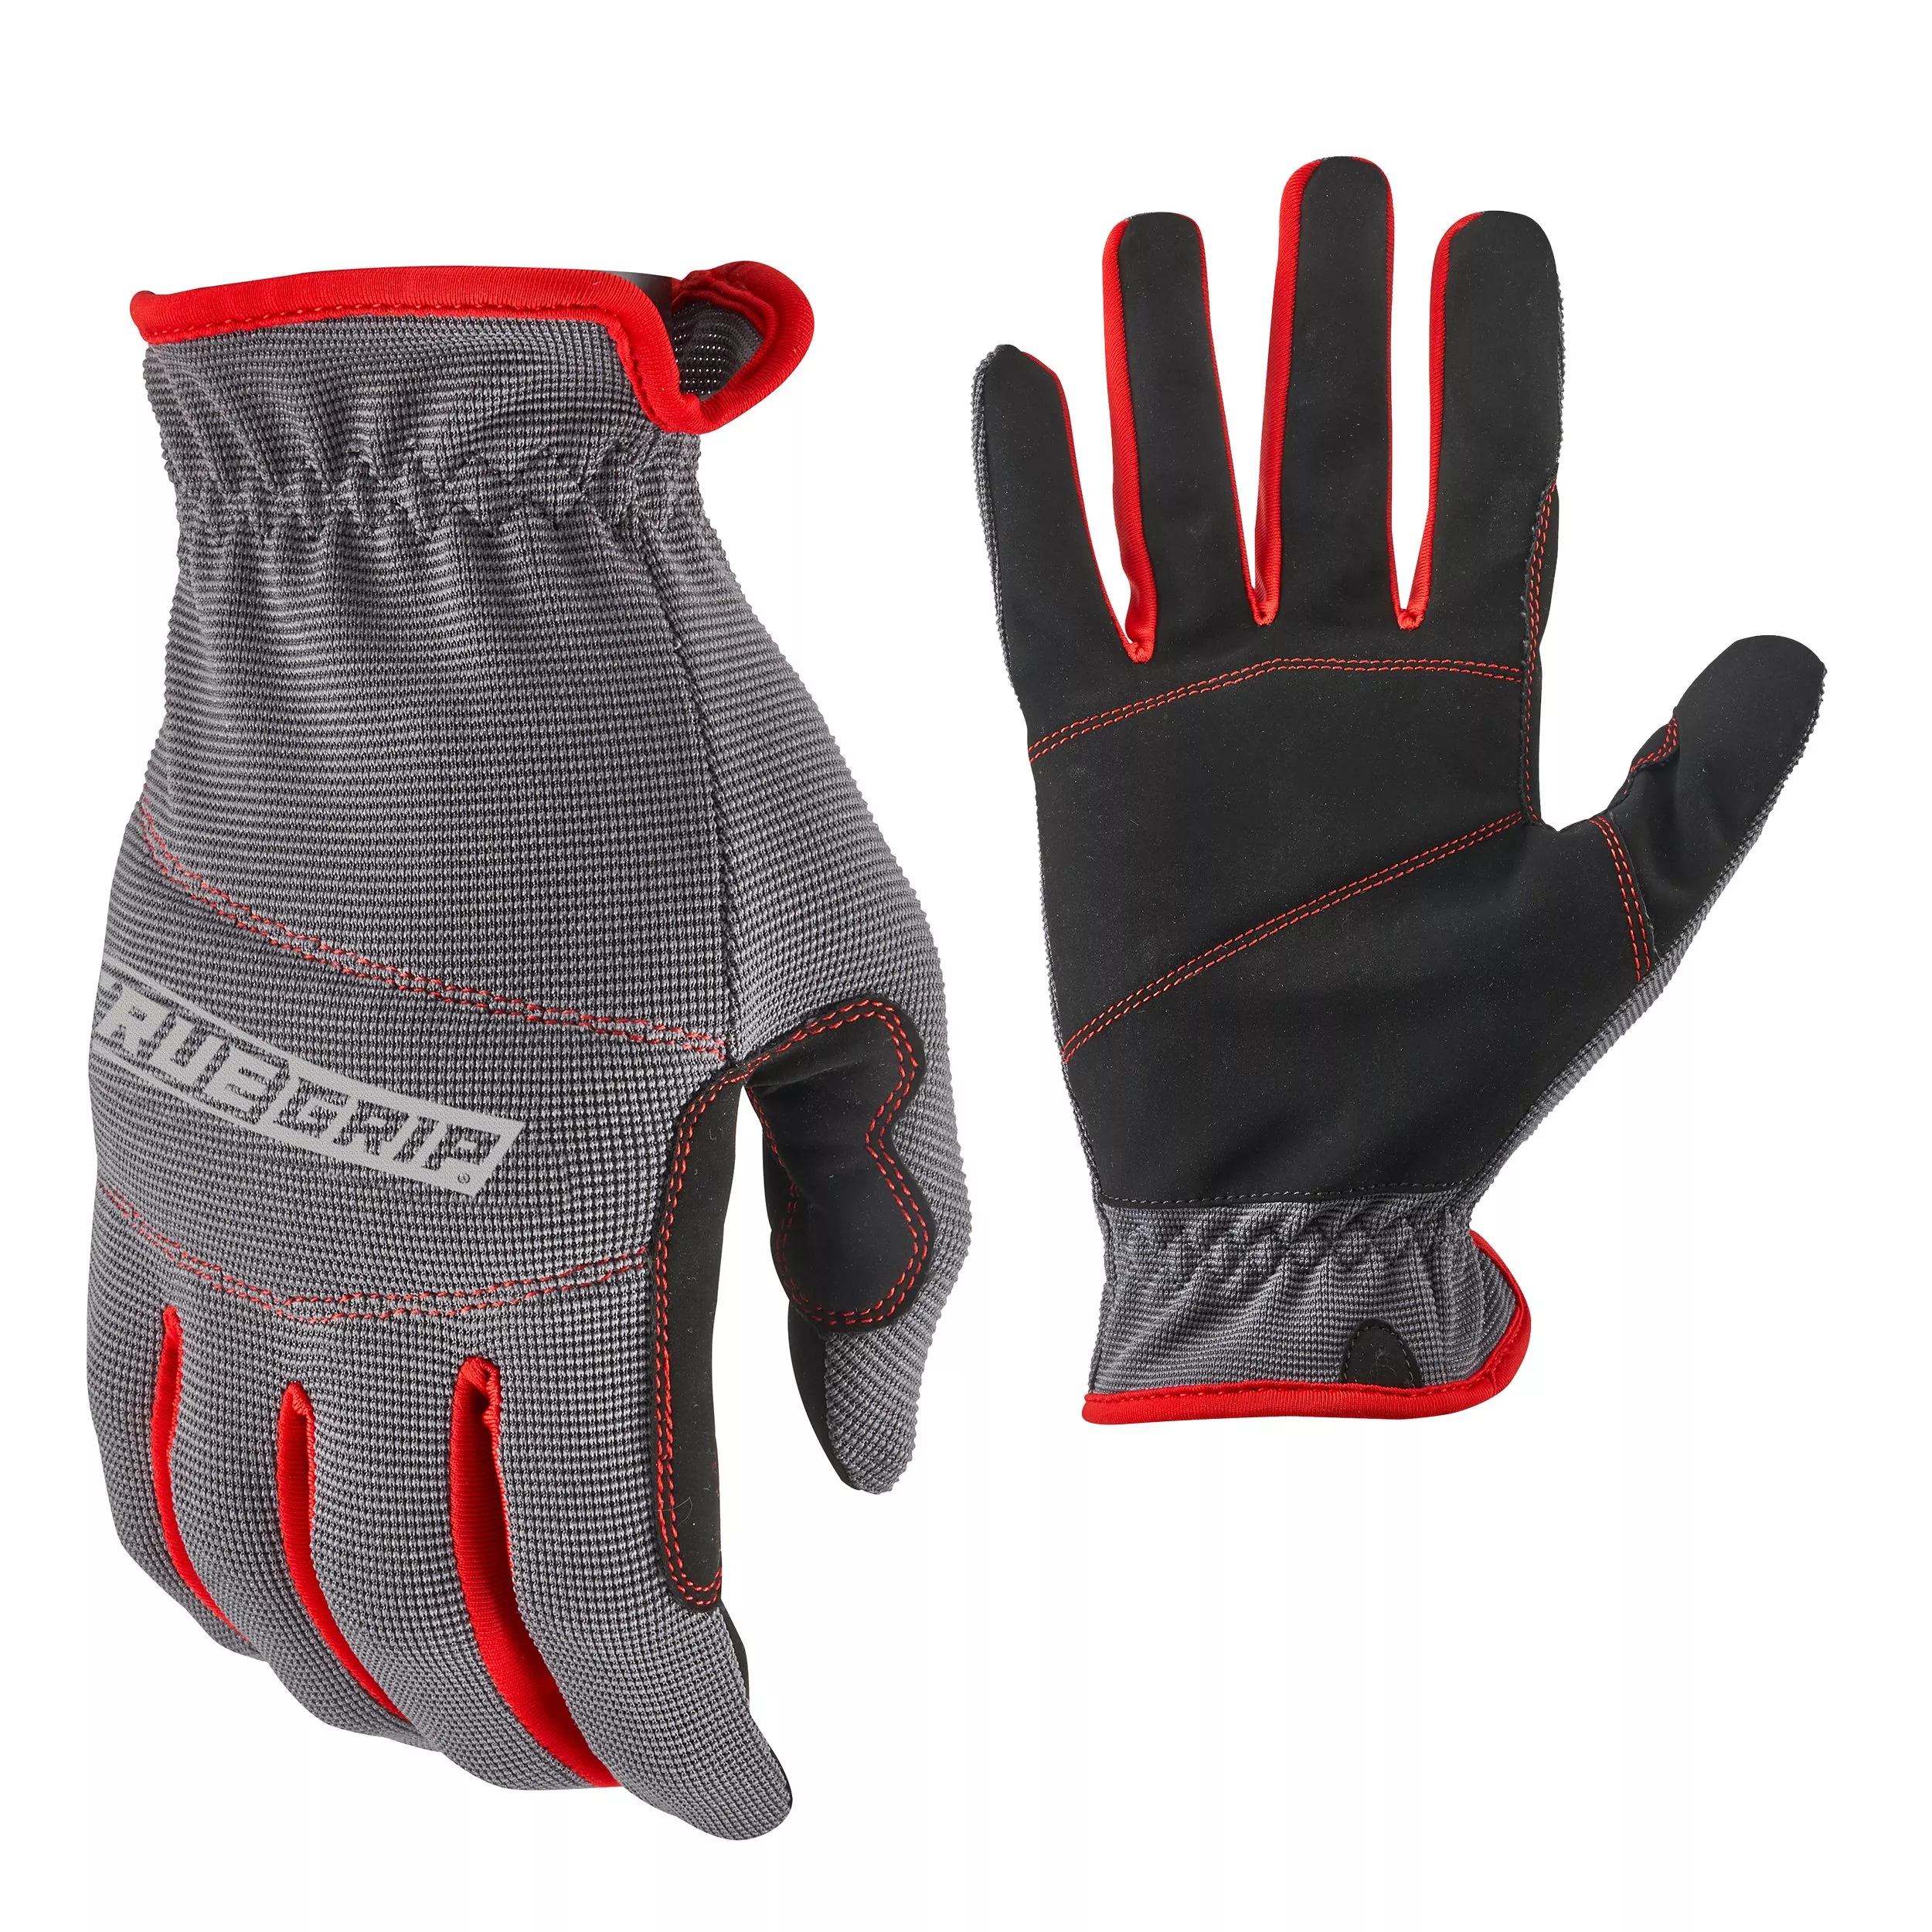 True Grip High Performance Utility Gloves